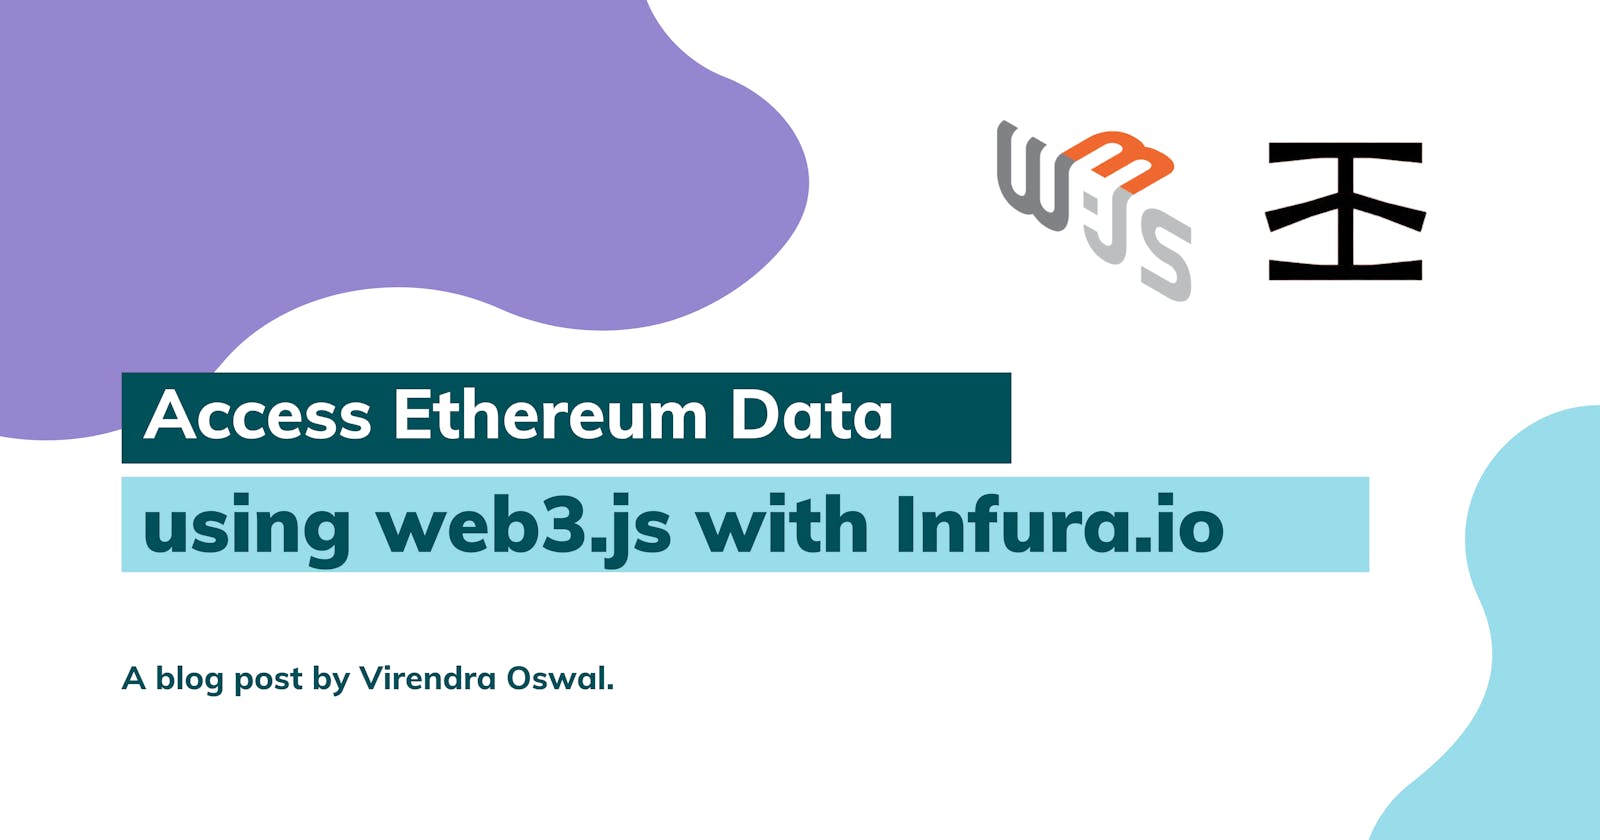 Access Ethereum Data via Web3.js and Infura.io